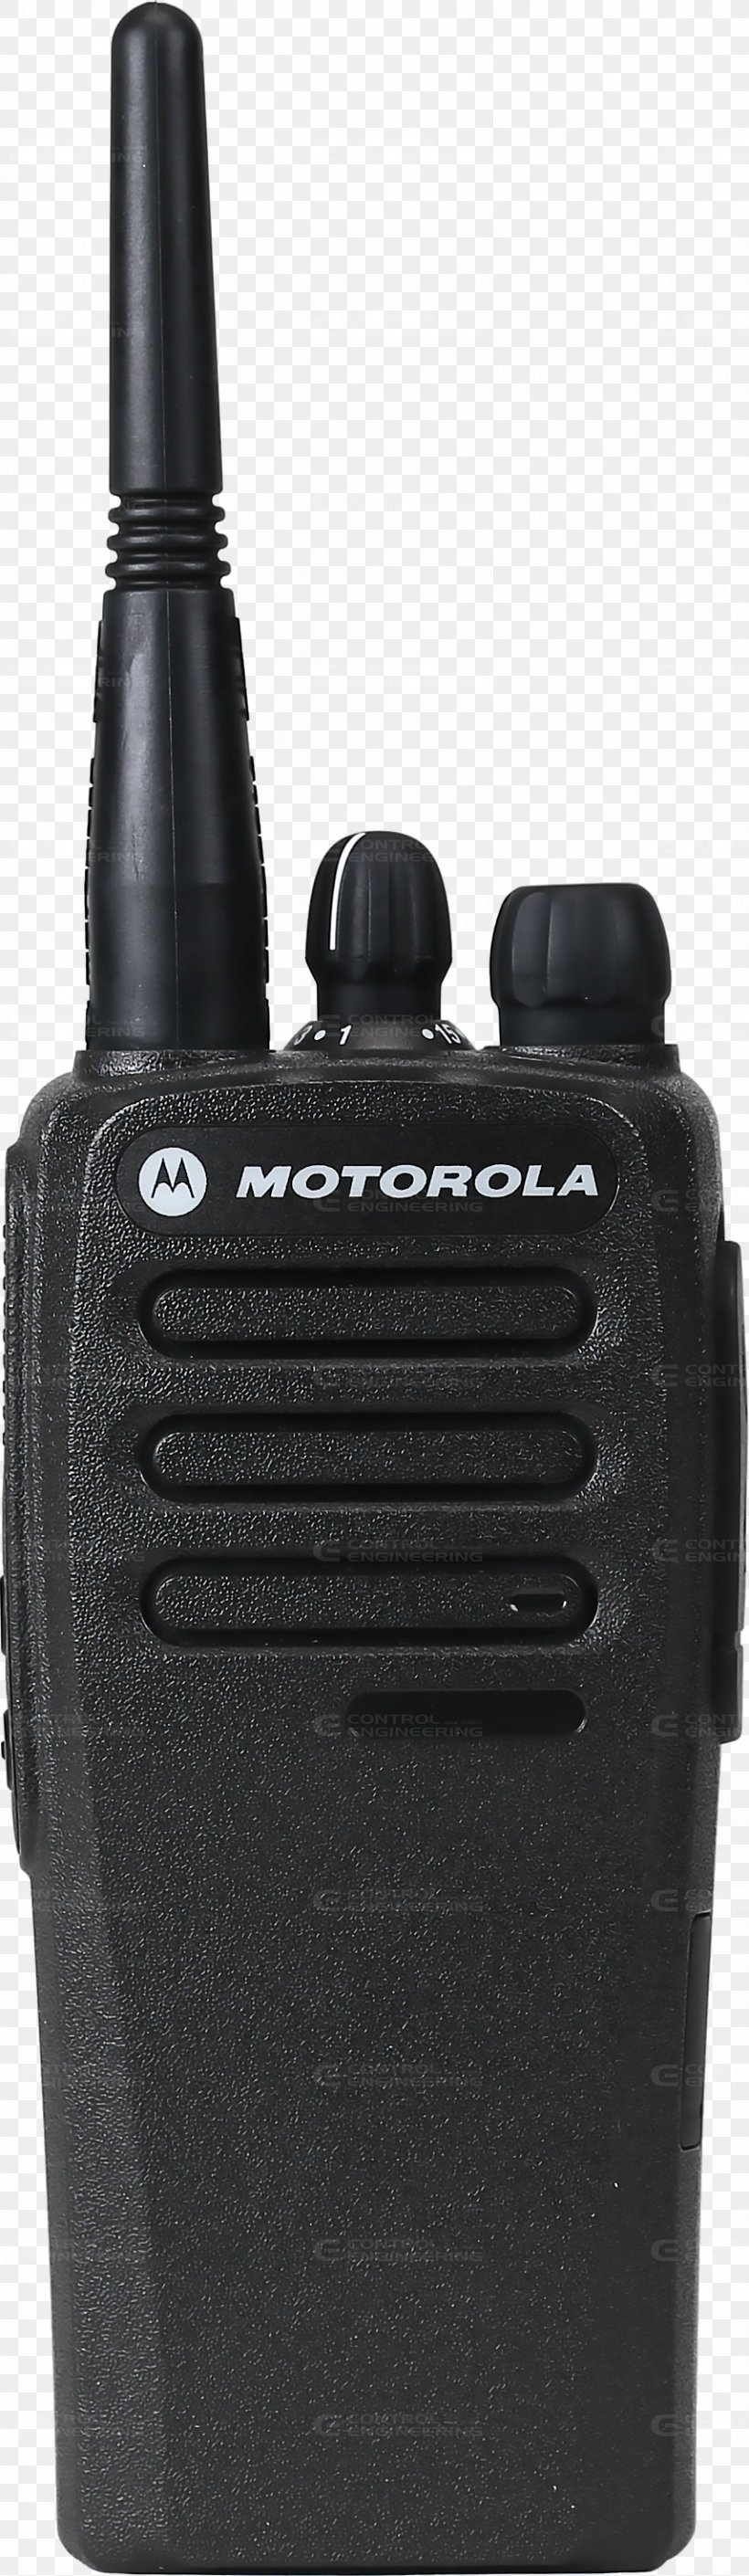 Two-way Radio Motorola Solutions Motorola CP200D Walkie-talkie, PNG, 856x2945px, Twoway Radio, Analog Signal, Digital Mobile Radio, Electronic Device, Mobile Radio Download Free